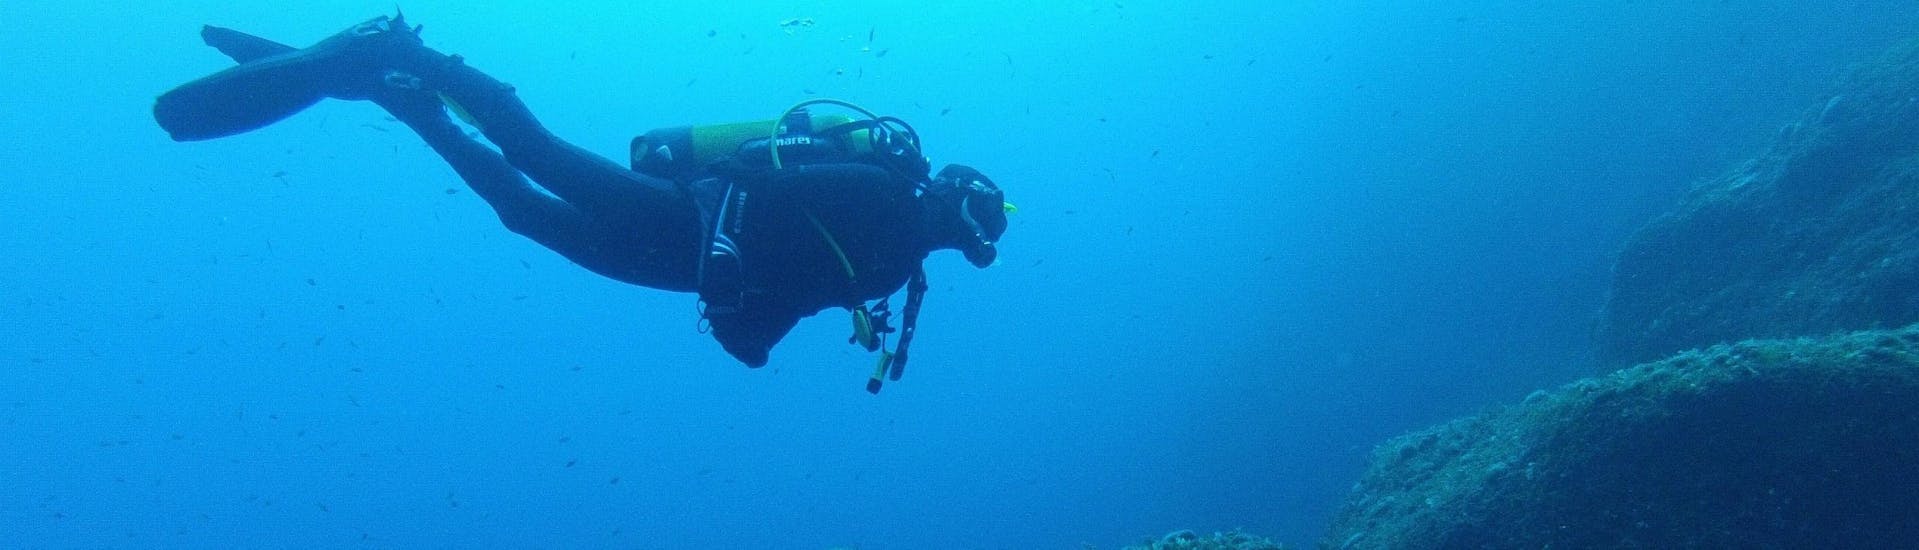 PADI Discover Scuba Diving in Gozo, Malta.